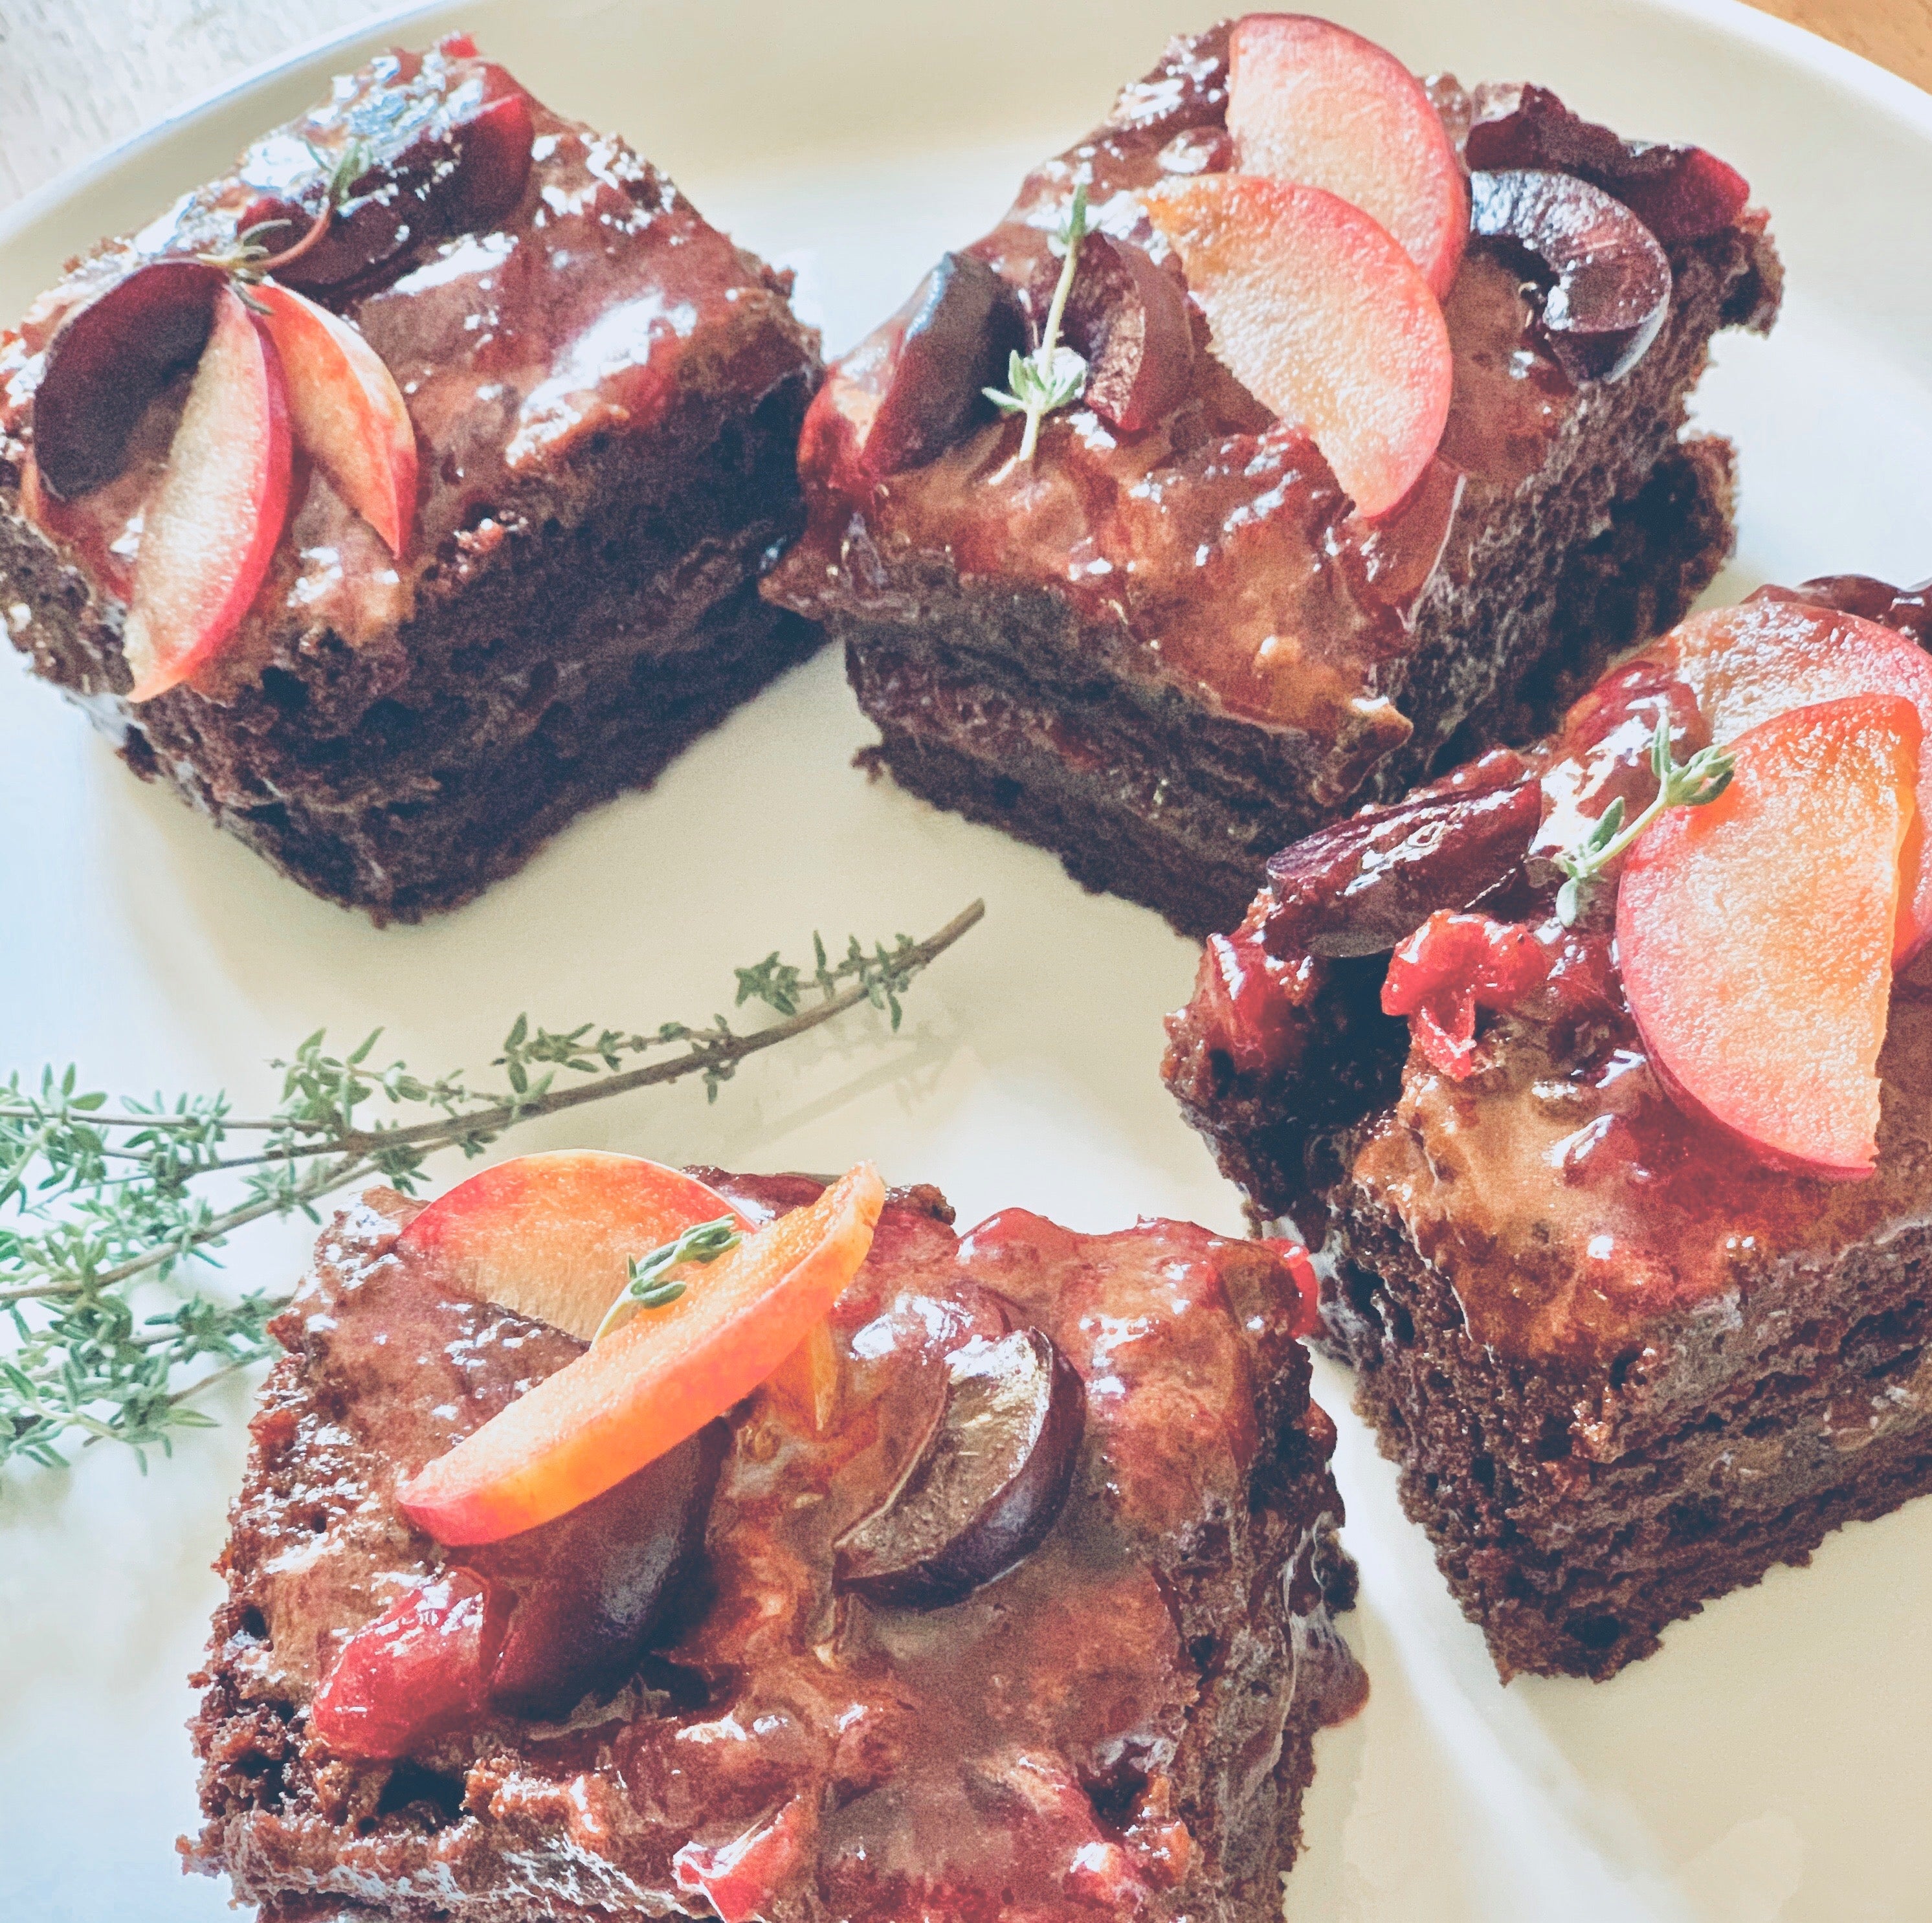 Raspberry chocolate cake | The Vegan Society